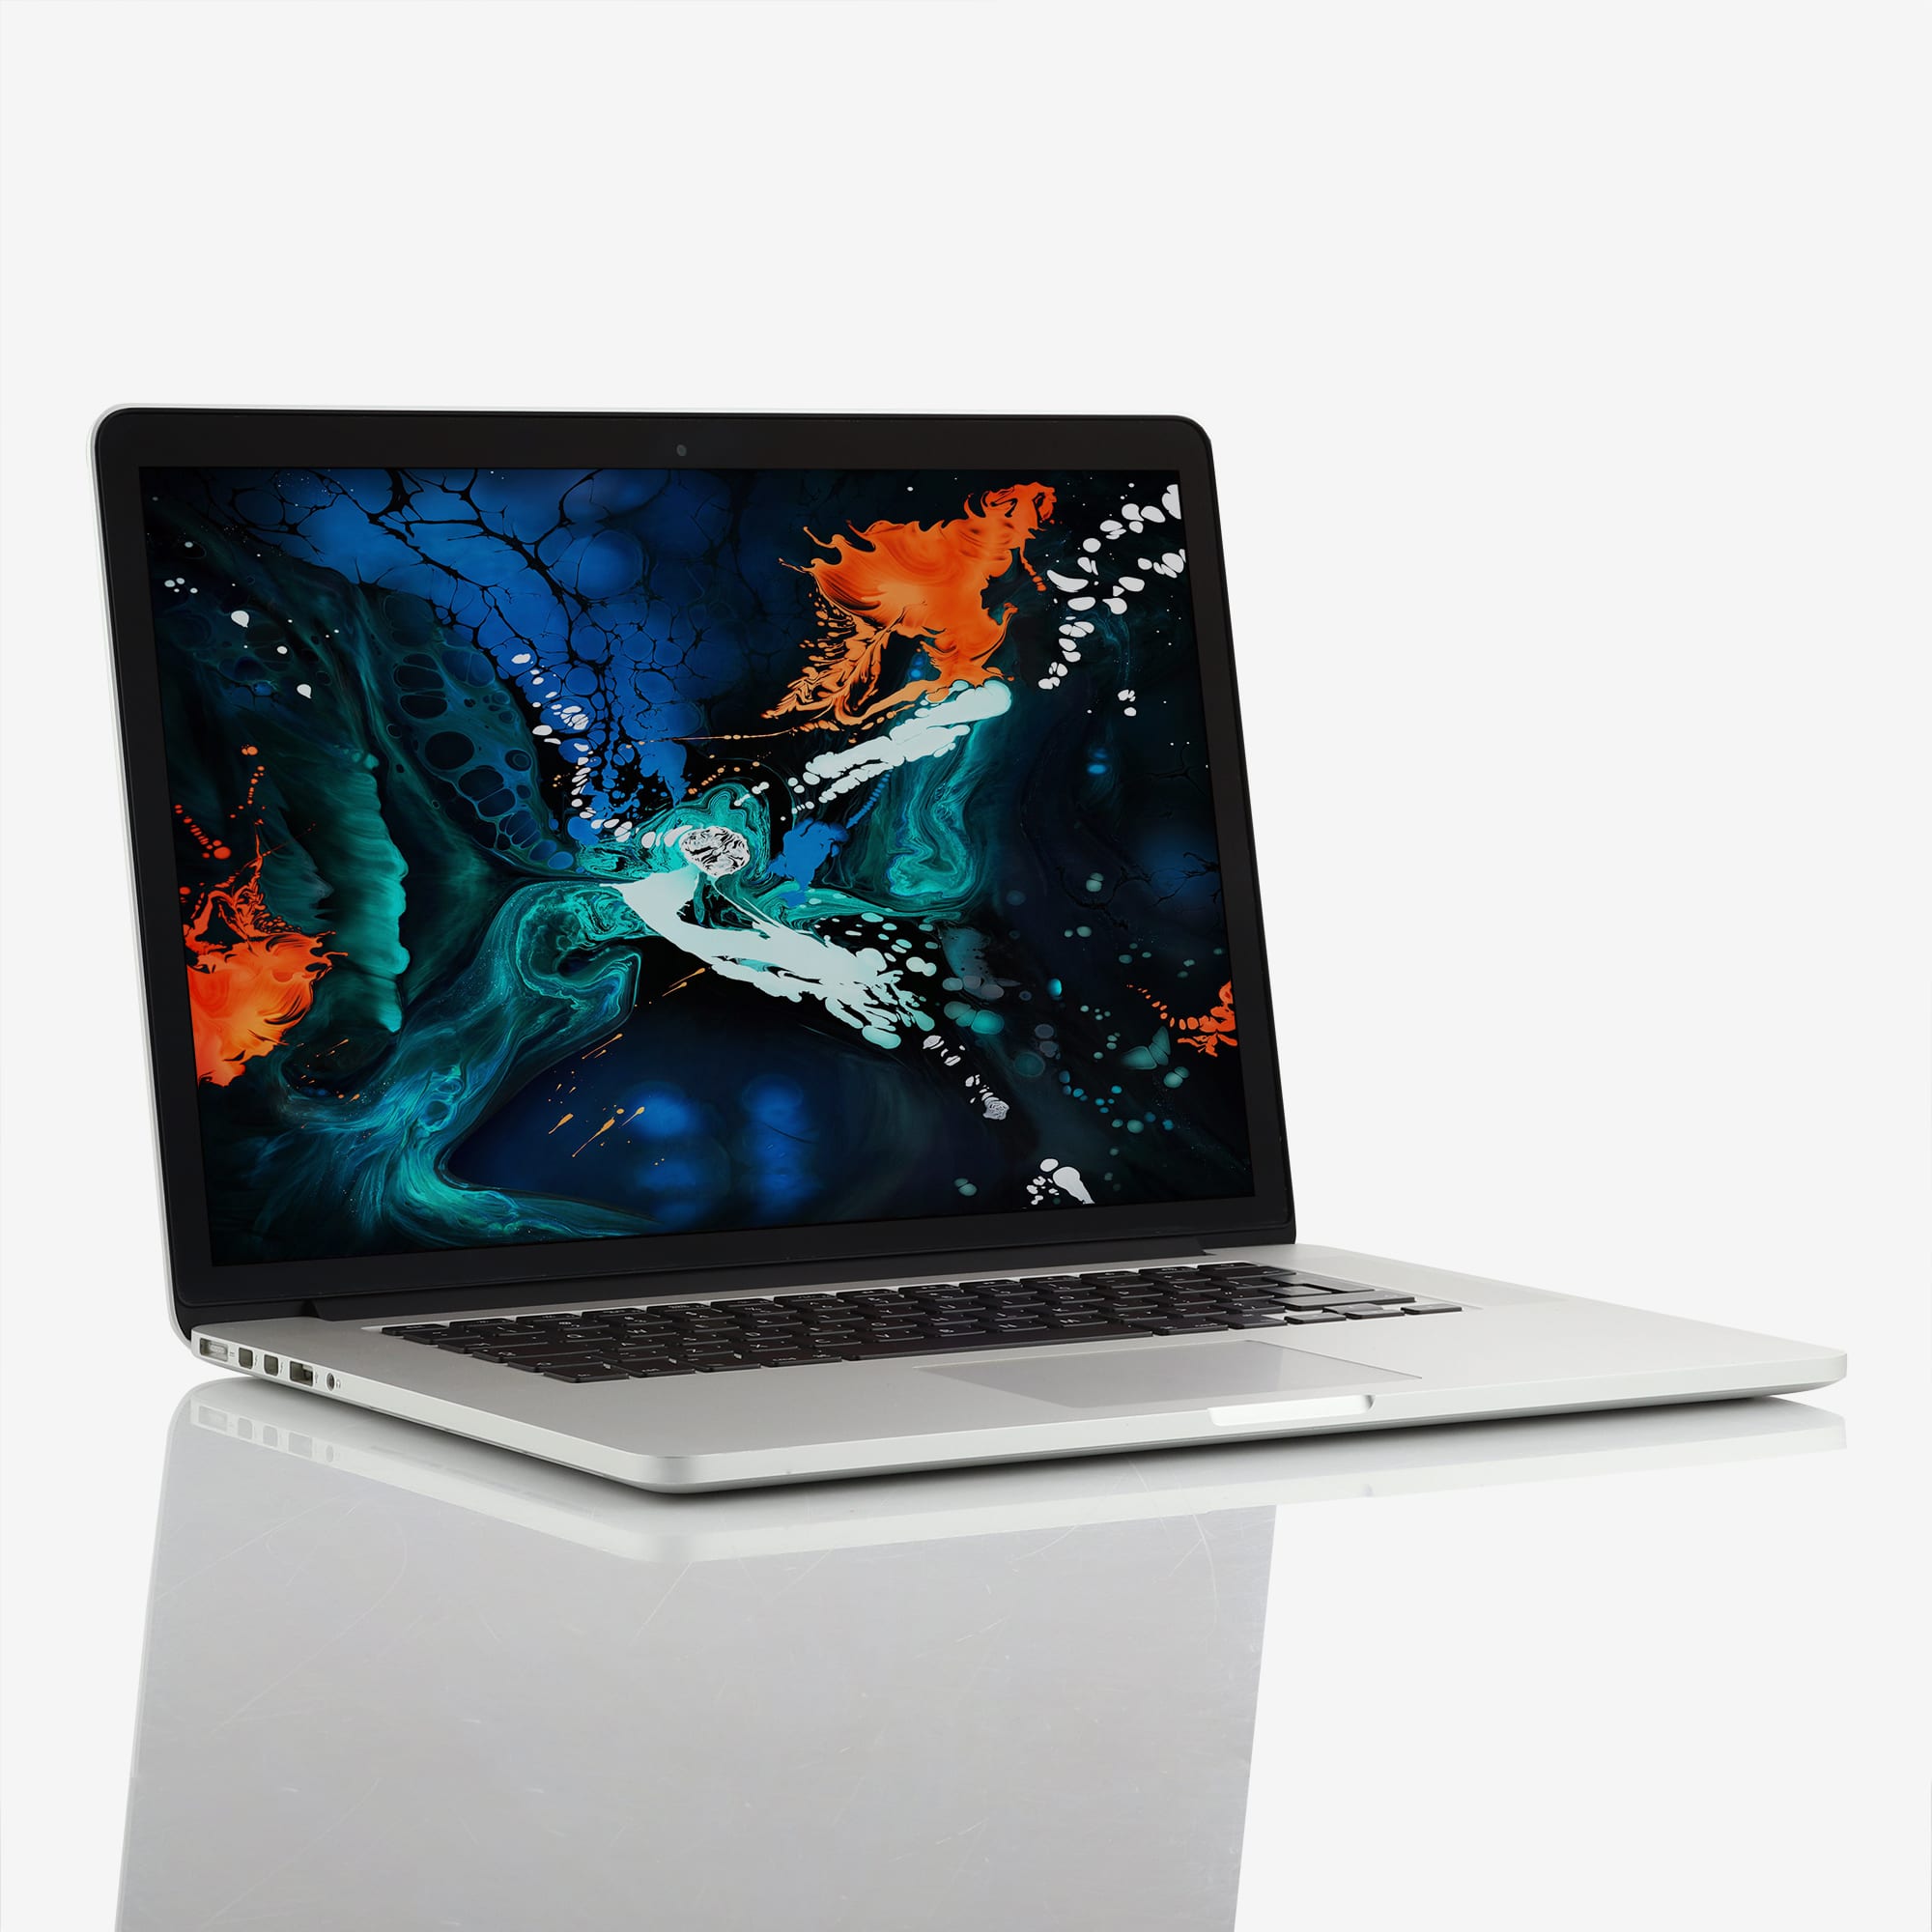 1 x Apple MacBook Pro Retina 15 Inch Quad Core i7 2.50 GHz (2014)